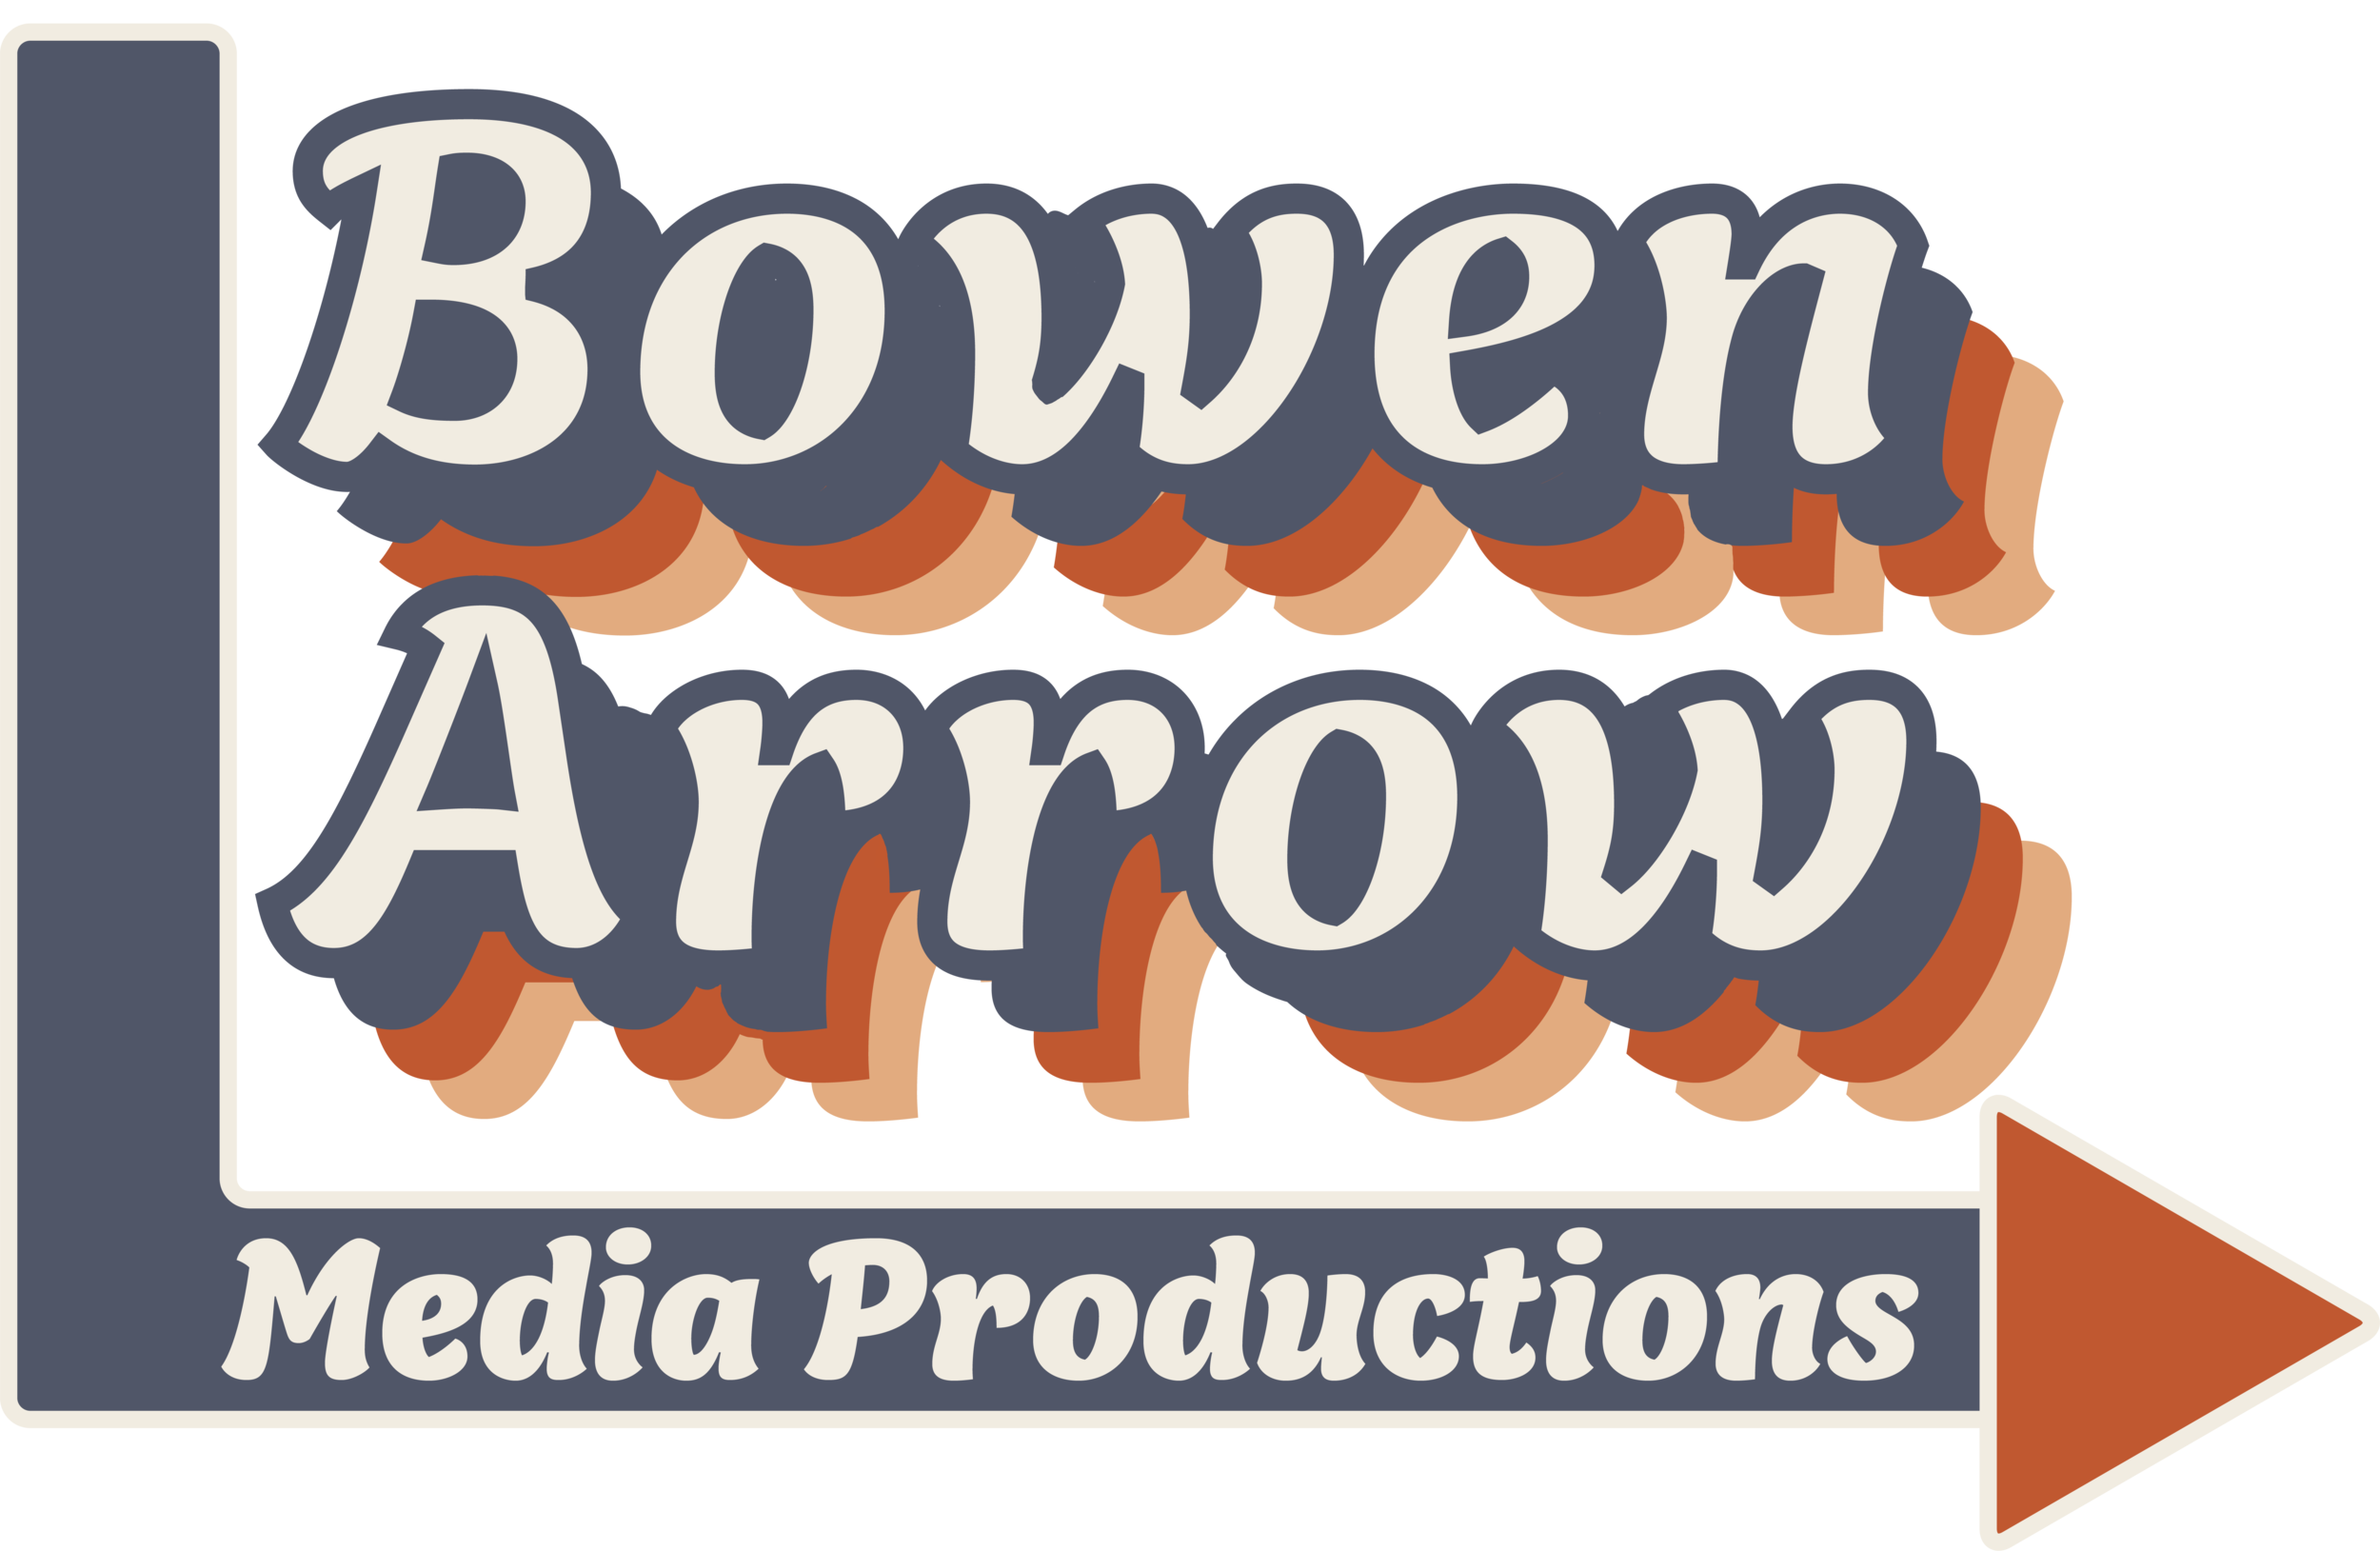 Bowen Arrow Media Productions